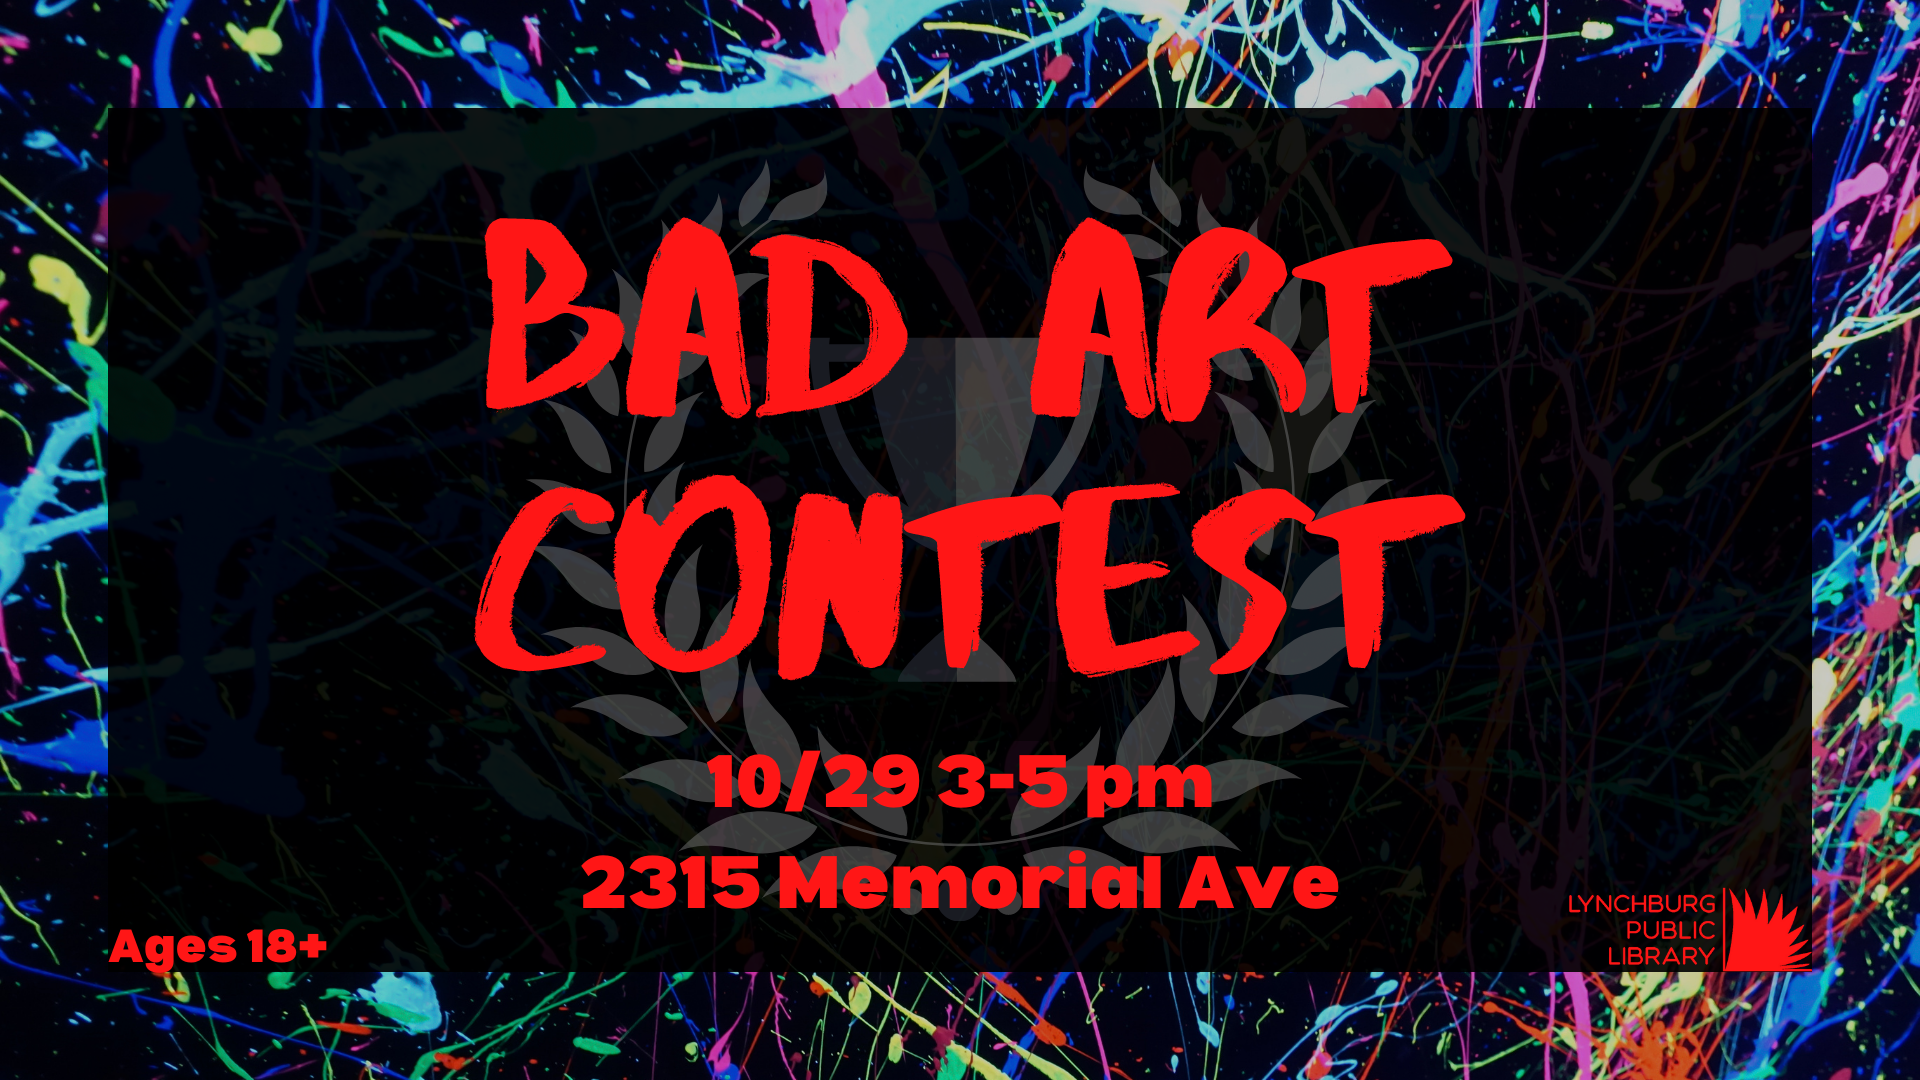 Bad Art Contest; 10/29, 3-5 pm; Ages 18+